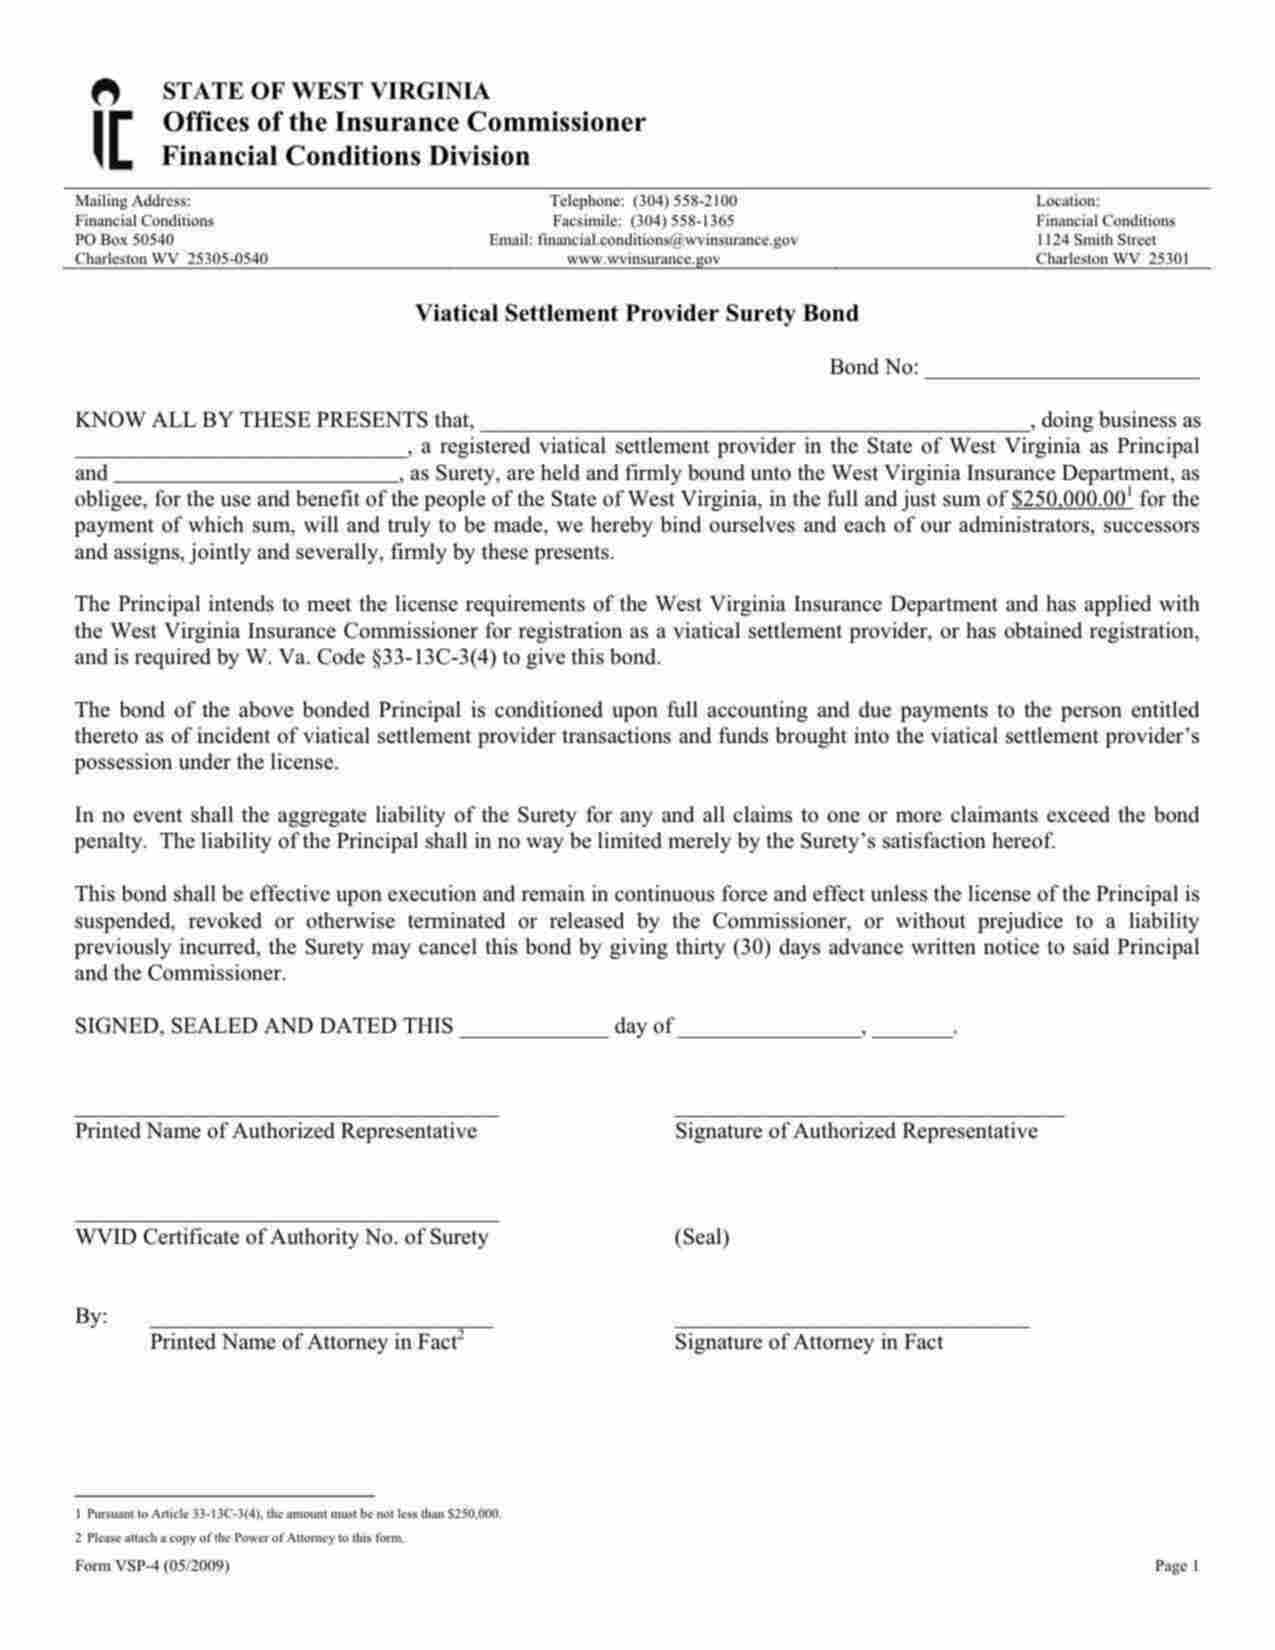 West Virginia Viatical Settlement Provider Bond Form